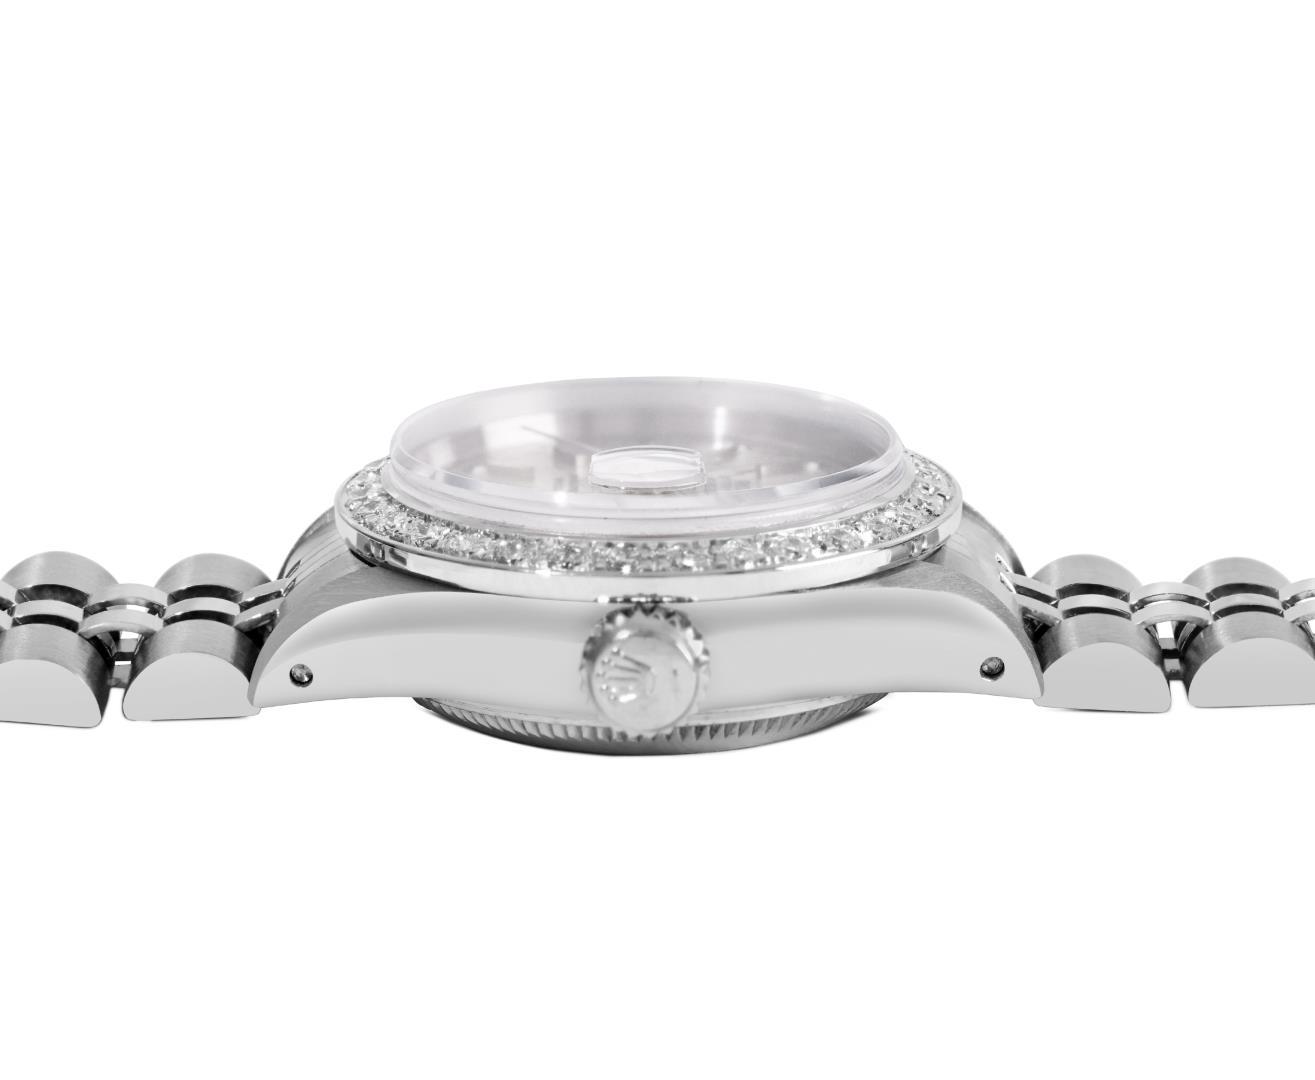 Rolex Ladies Stainless Steel Diamond Datejust Wristwatch With Rolex Box